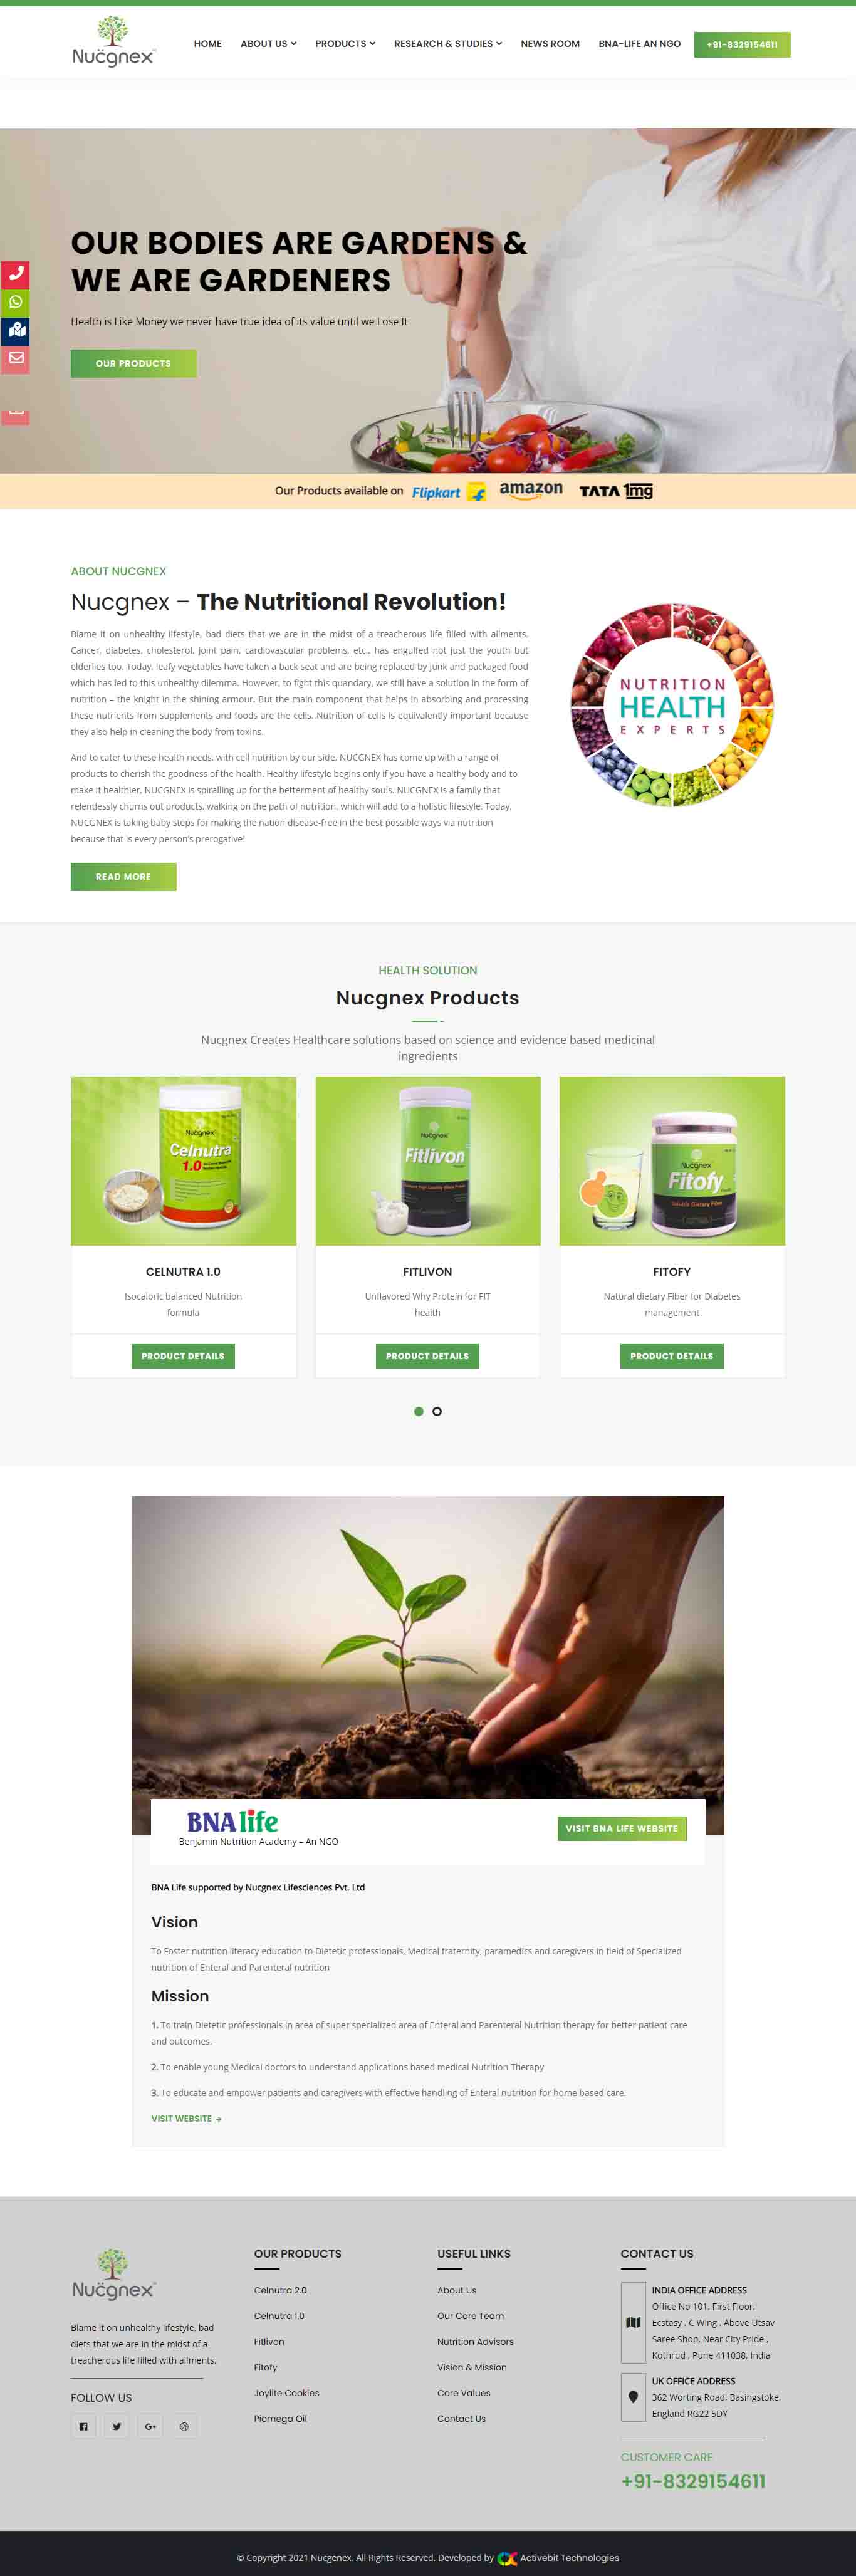 Nucgnex Lifesciences website design services